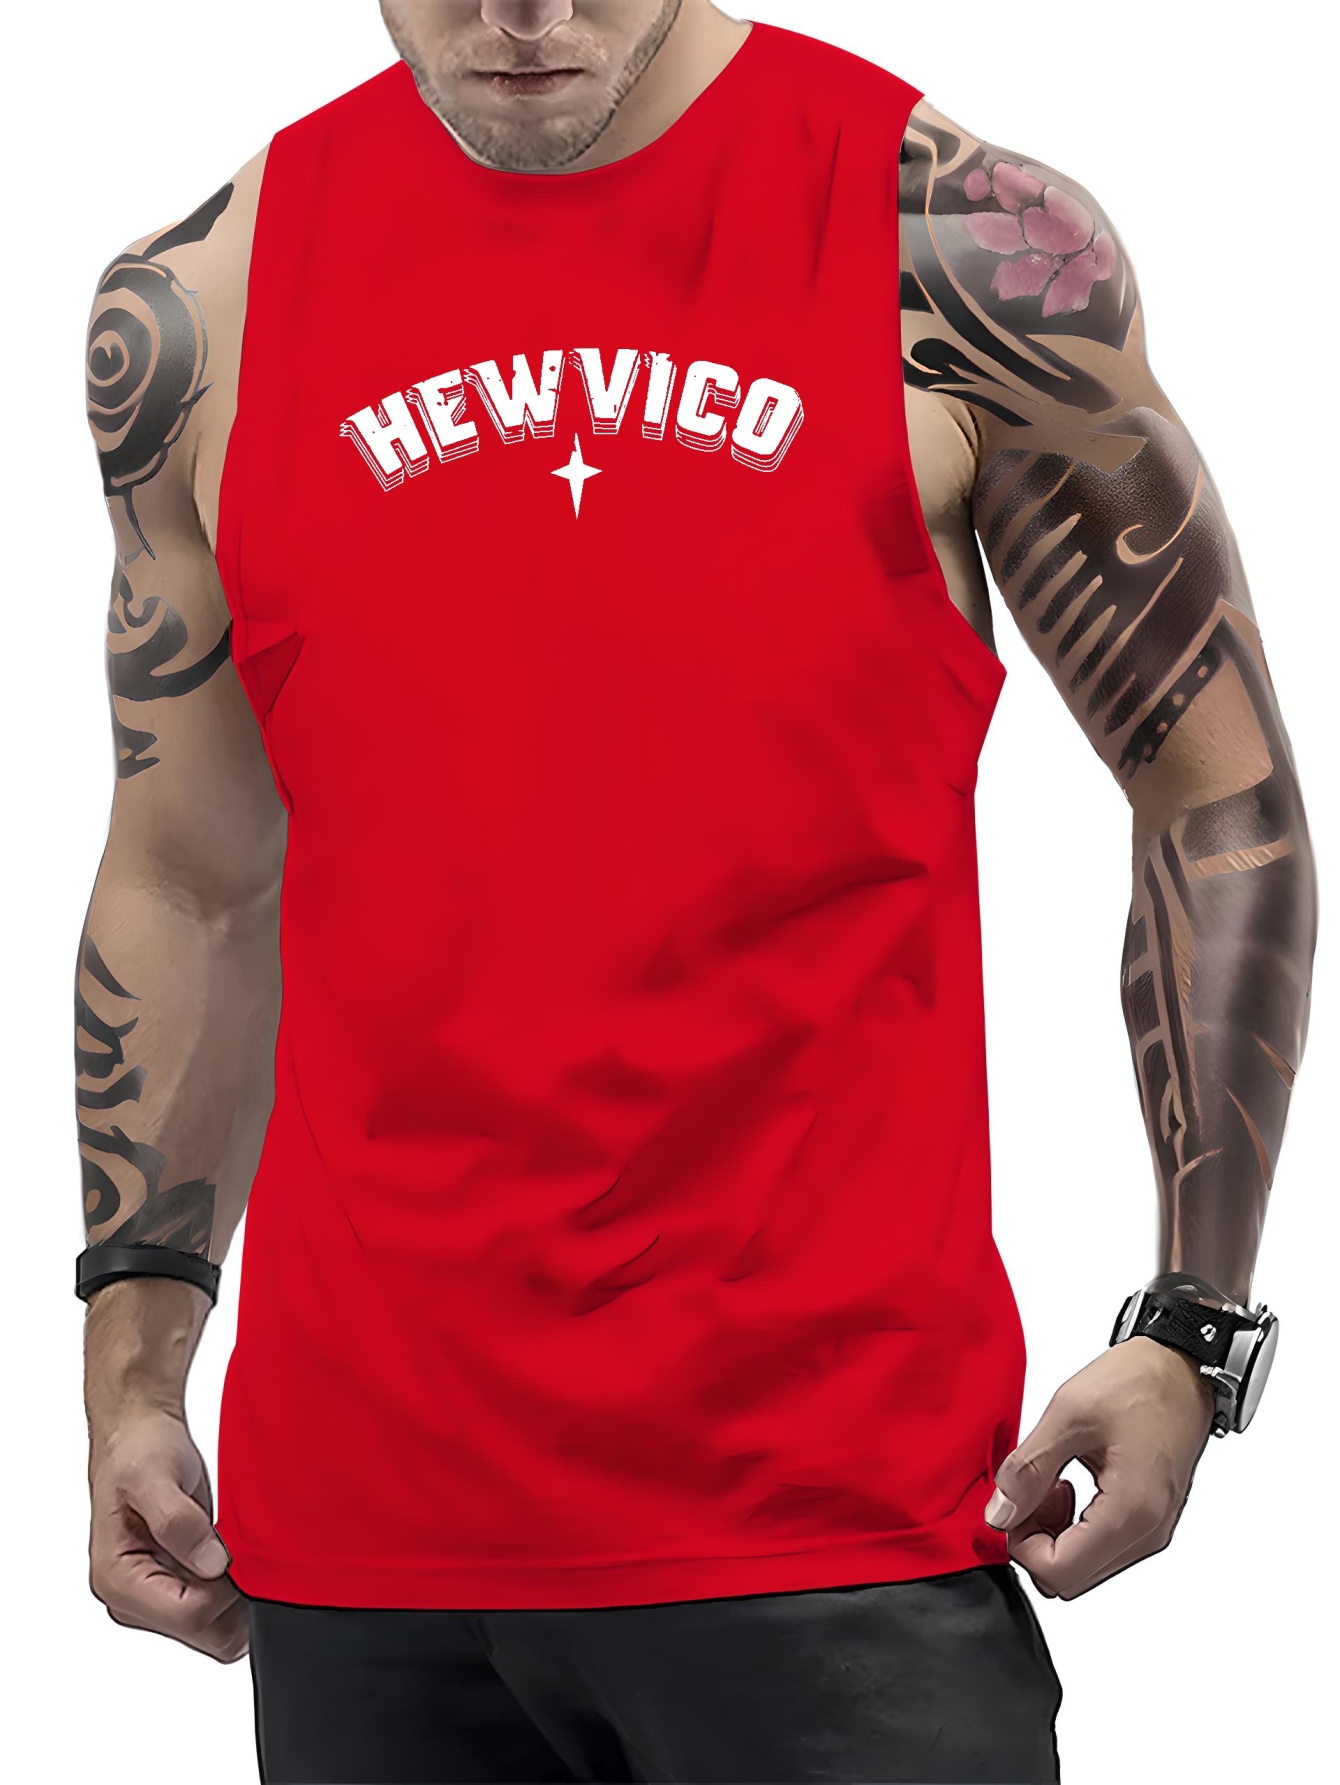 Hewvico Print A Shirt Tanks Men S Singlet Dry Fit Sleeveless Tank